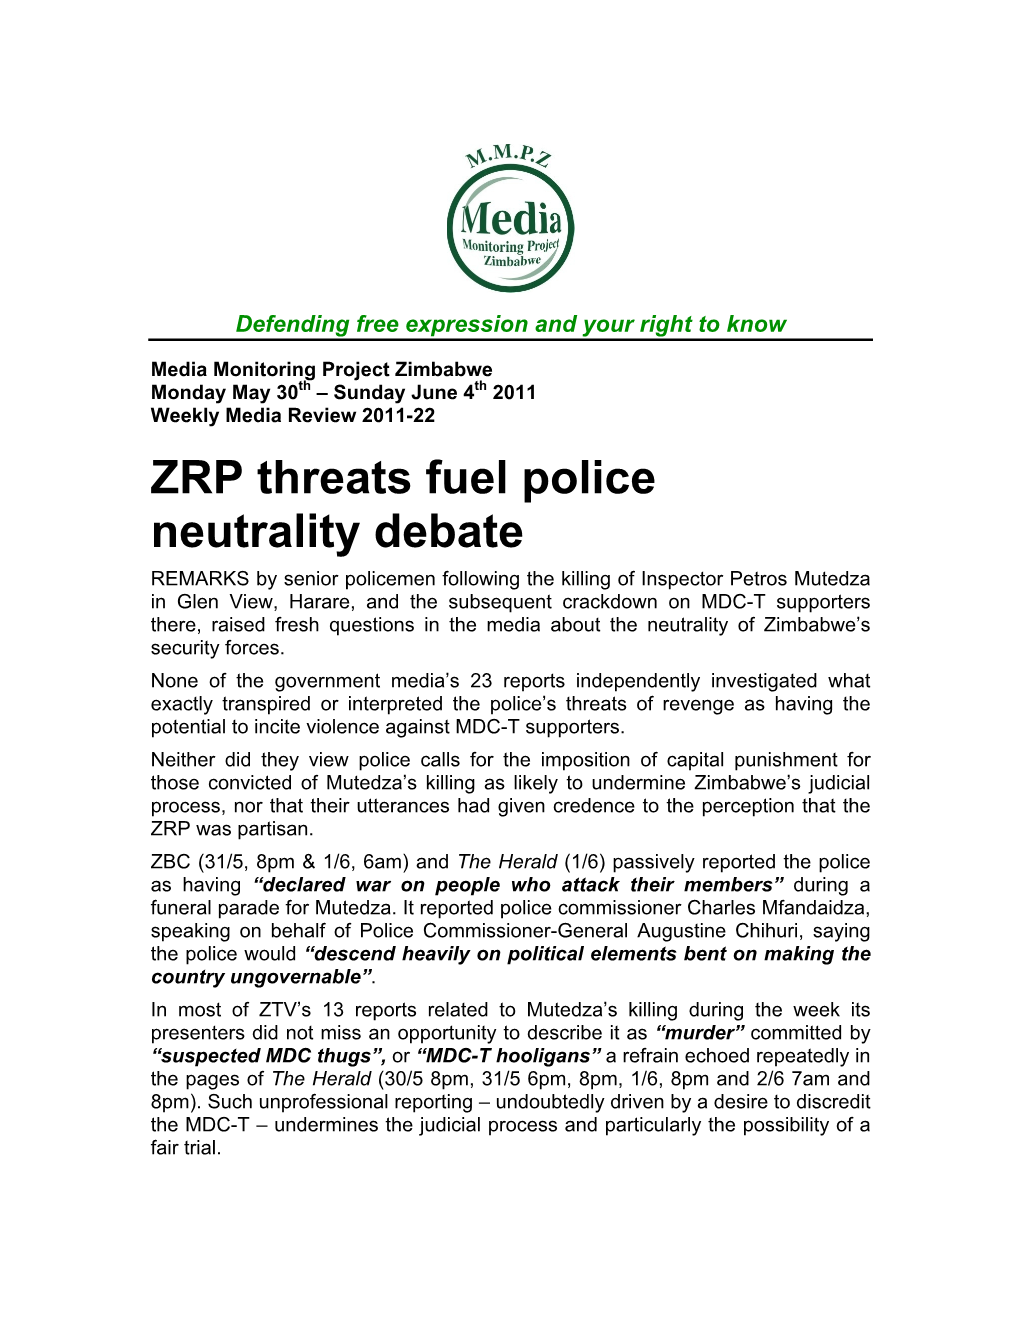 ZRP Threats Fuel Police Neutrality Debate